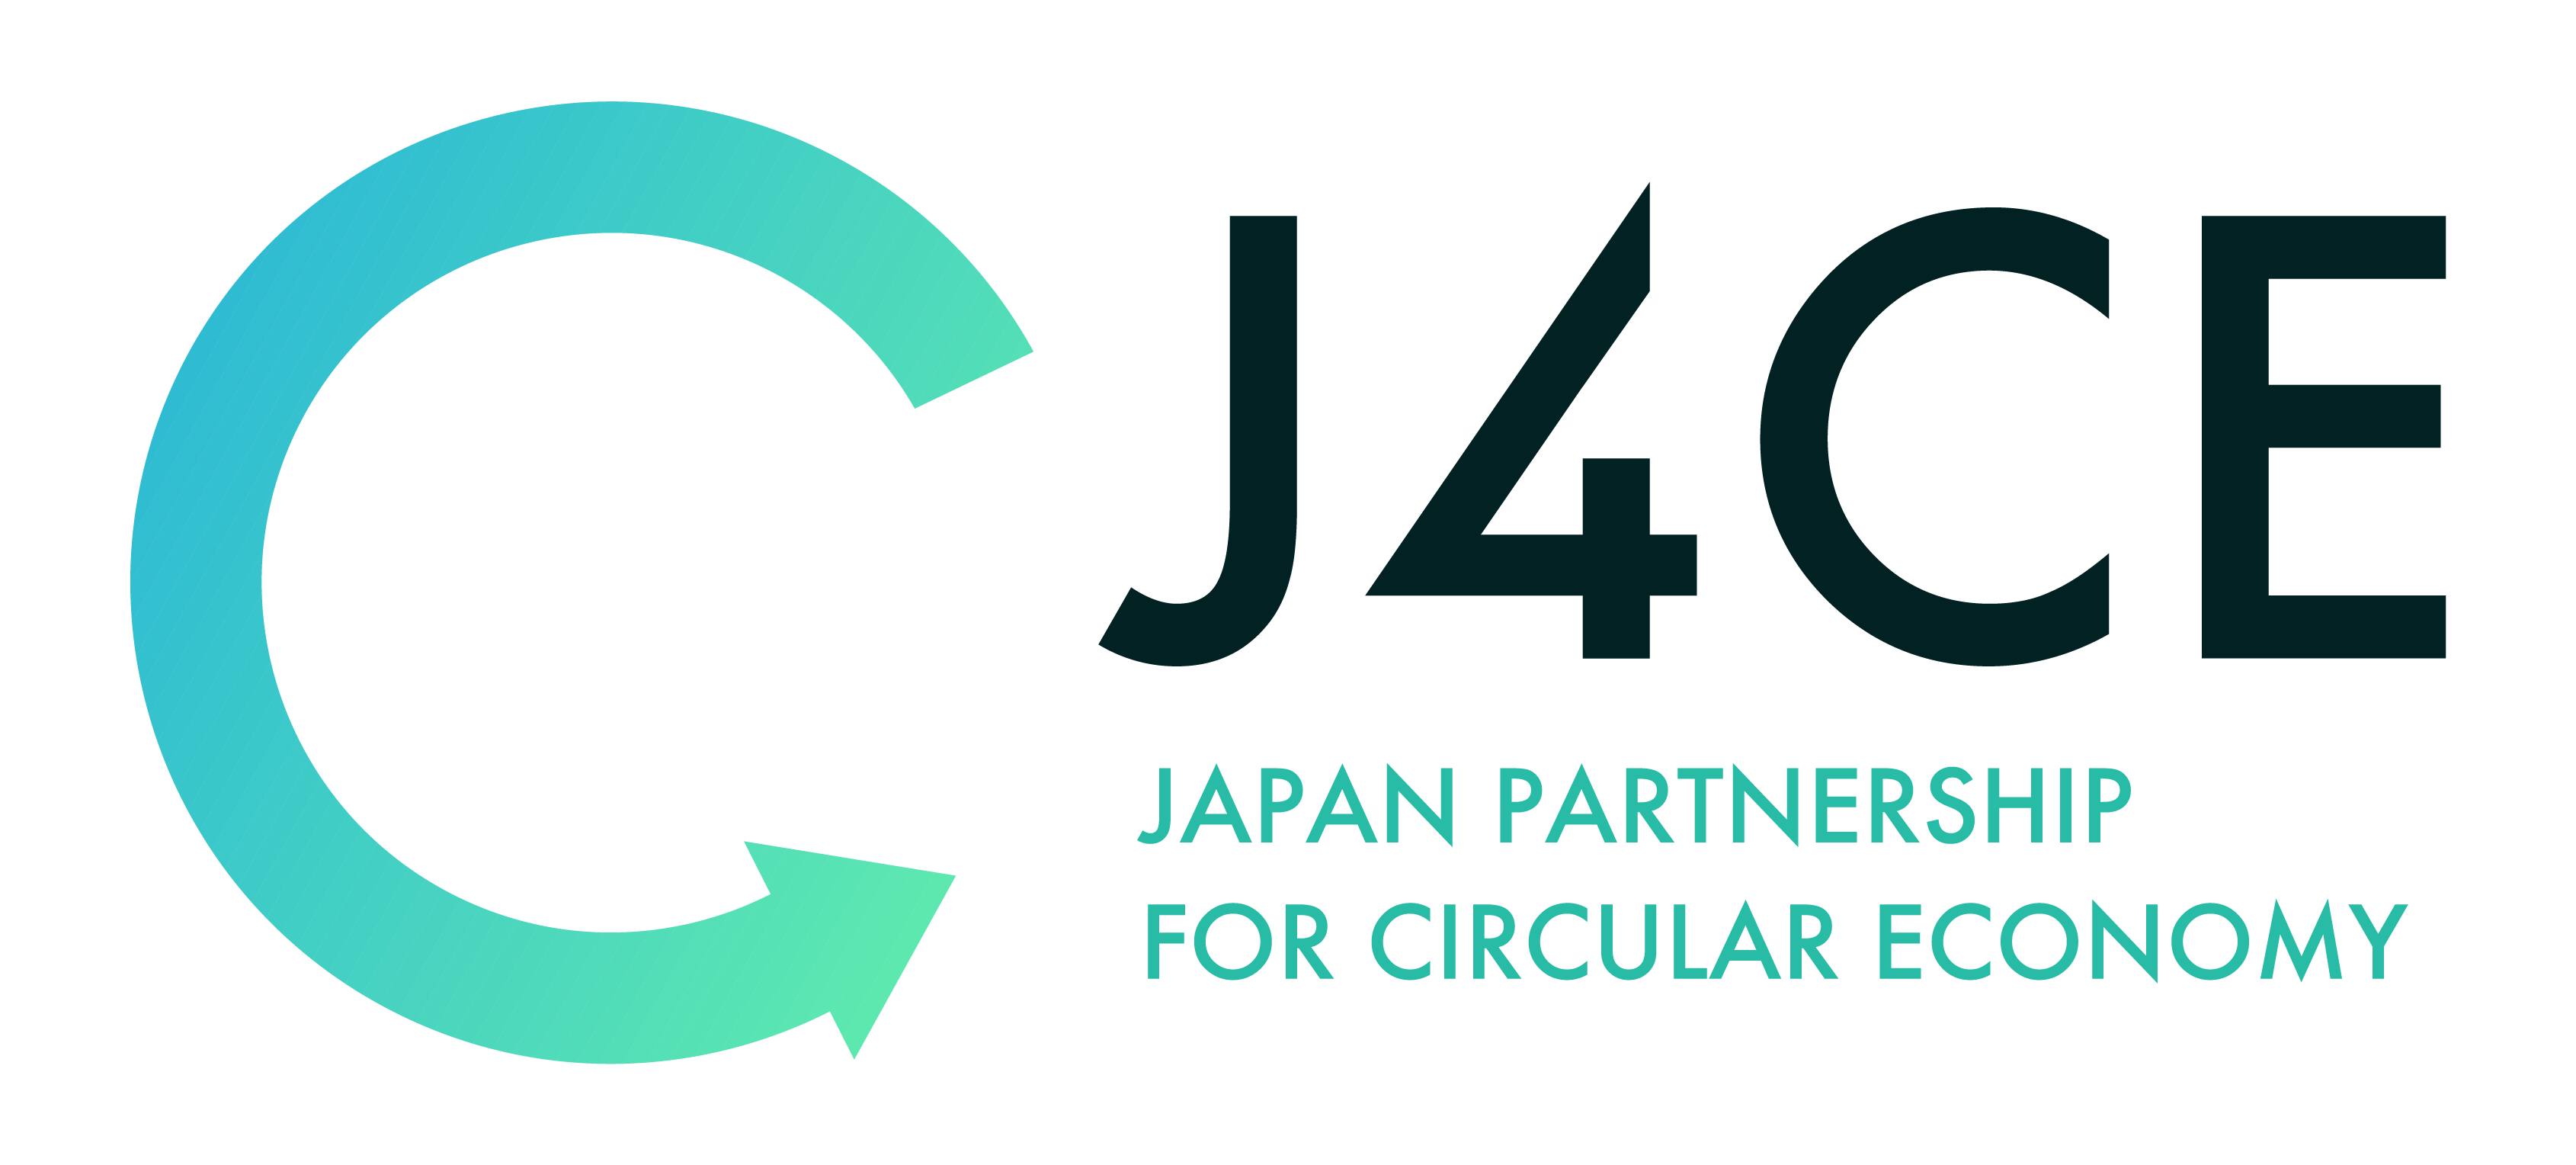 Japan Partnership for Circular Economy